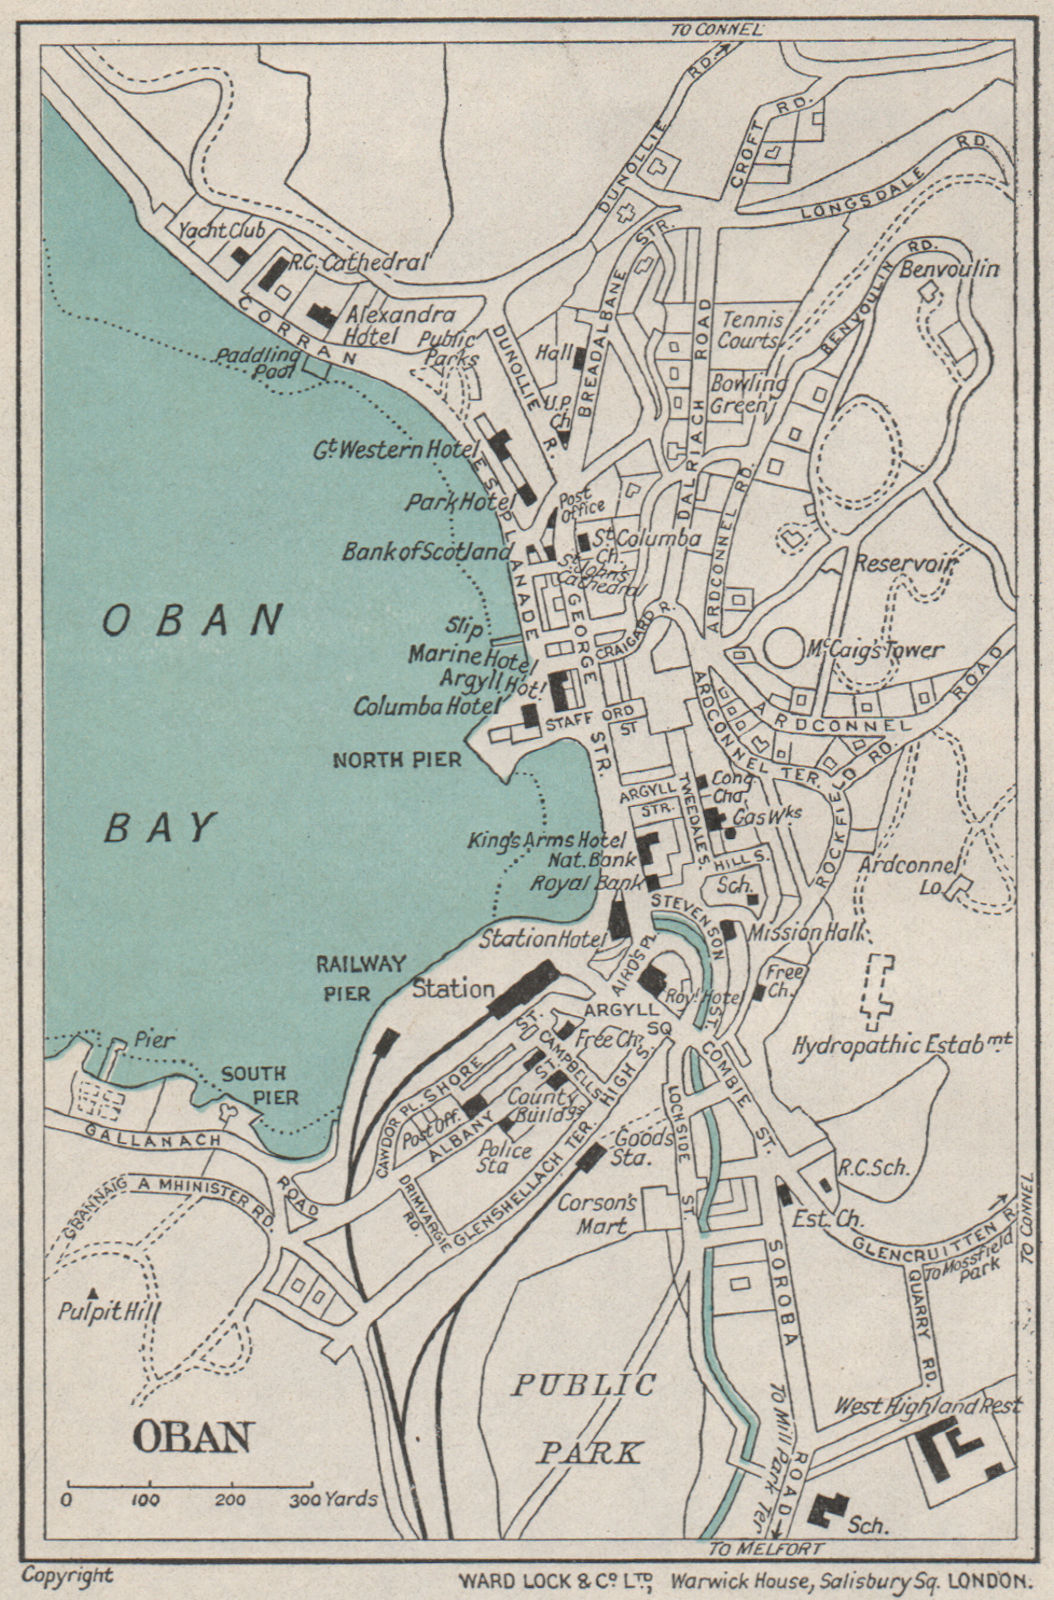 Associate Product OBAN vintage town/city plan. Scotland. WARD LOCK 1935 old vintage map chart